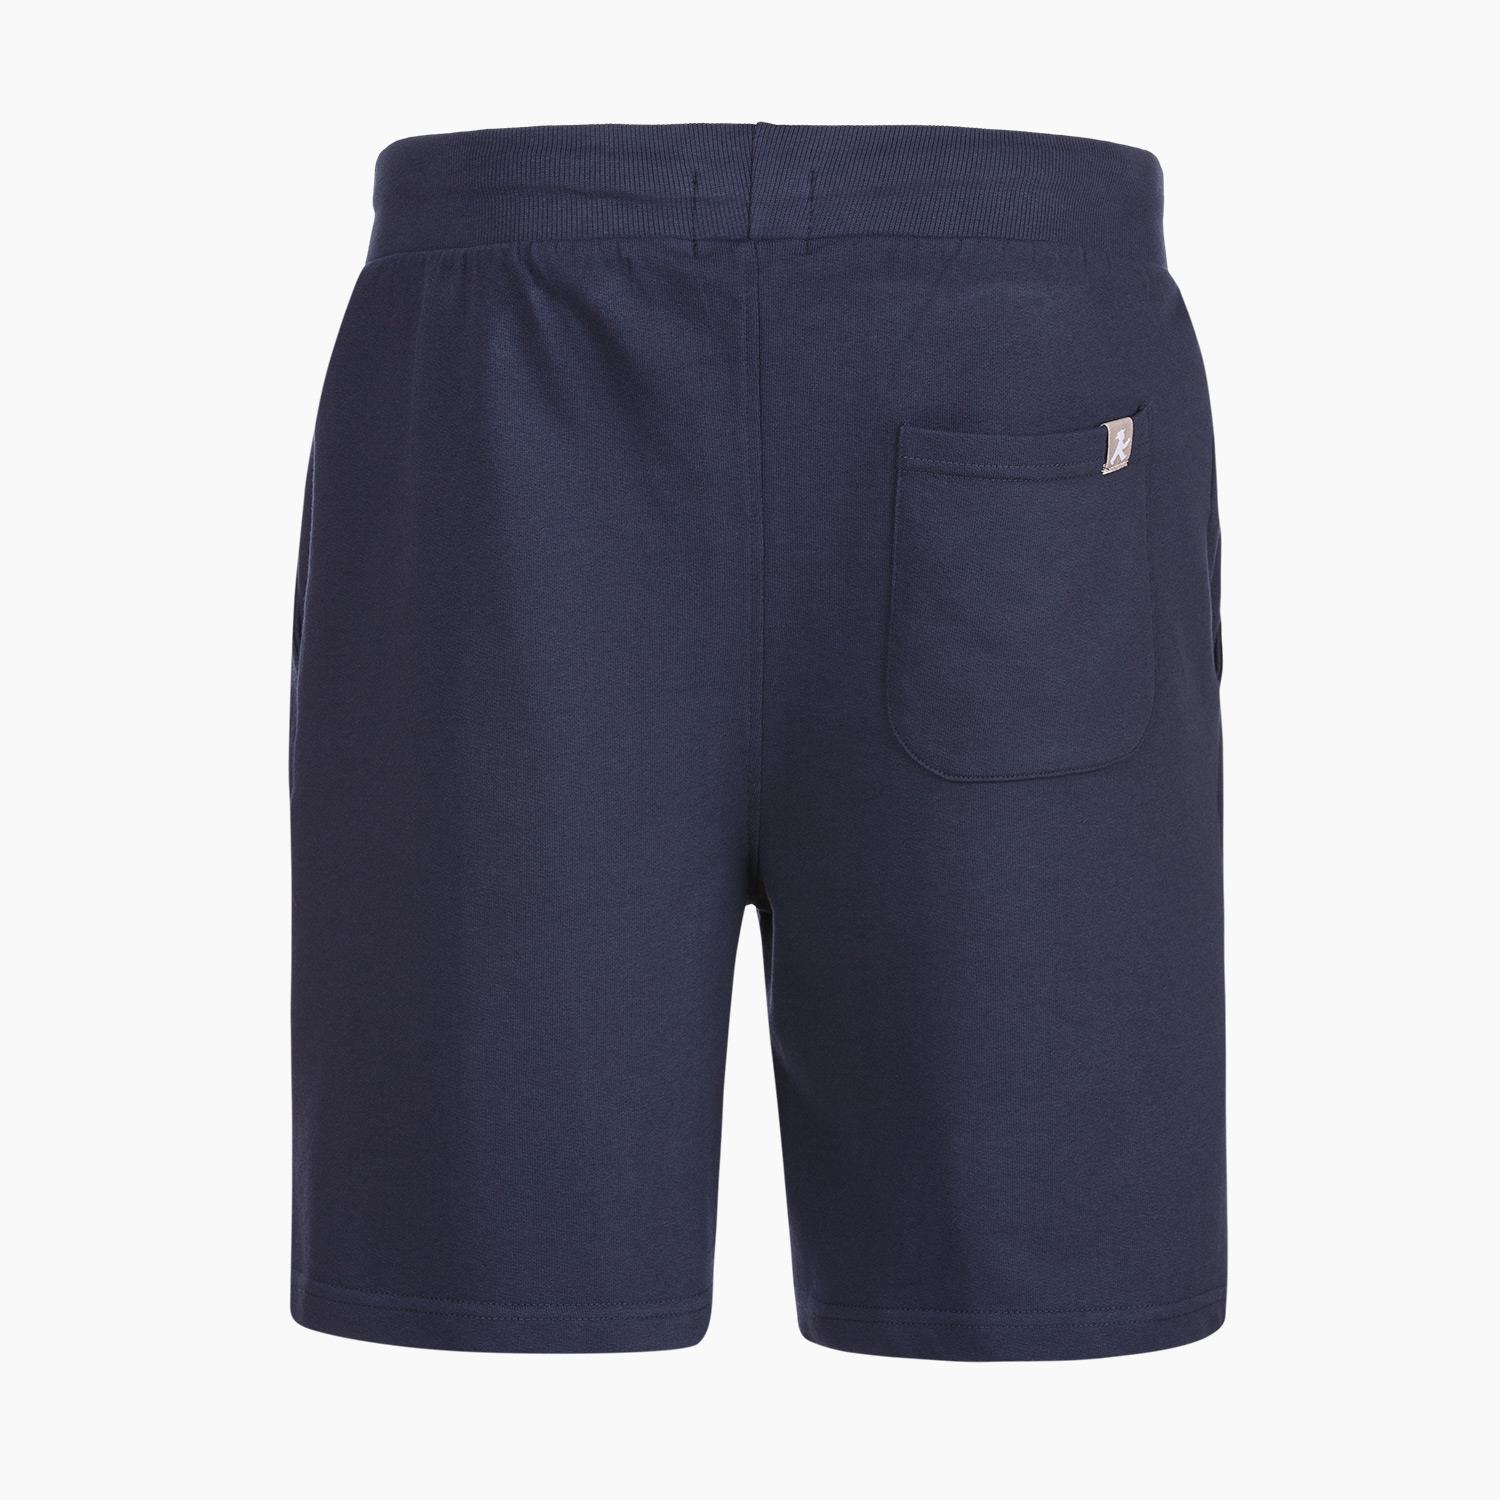 COUCH POTATO XL/ Herren Shorts